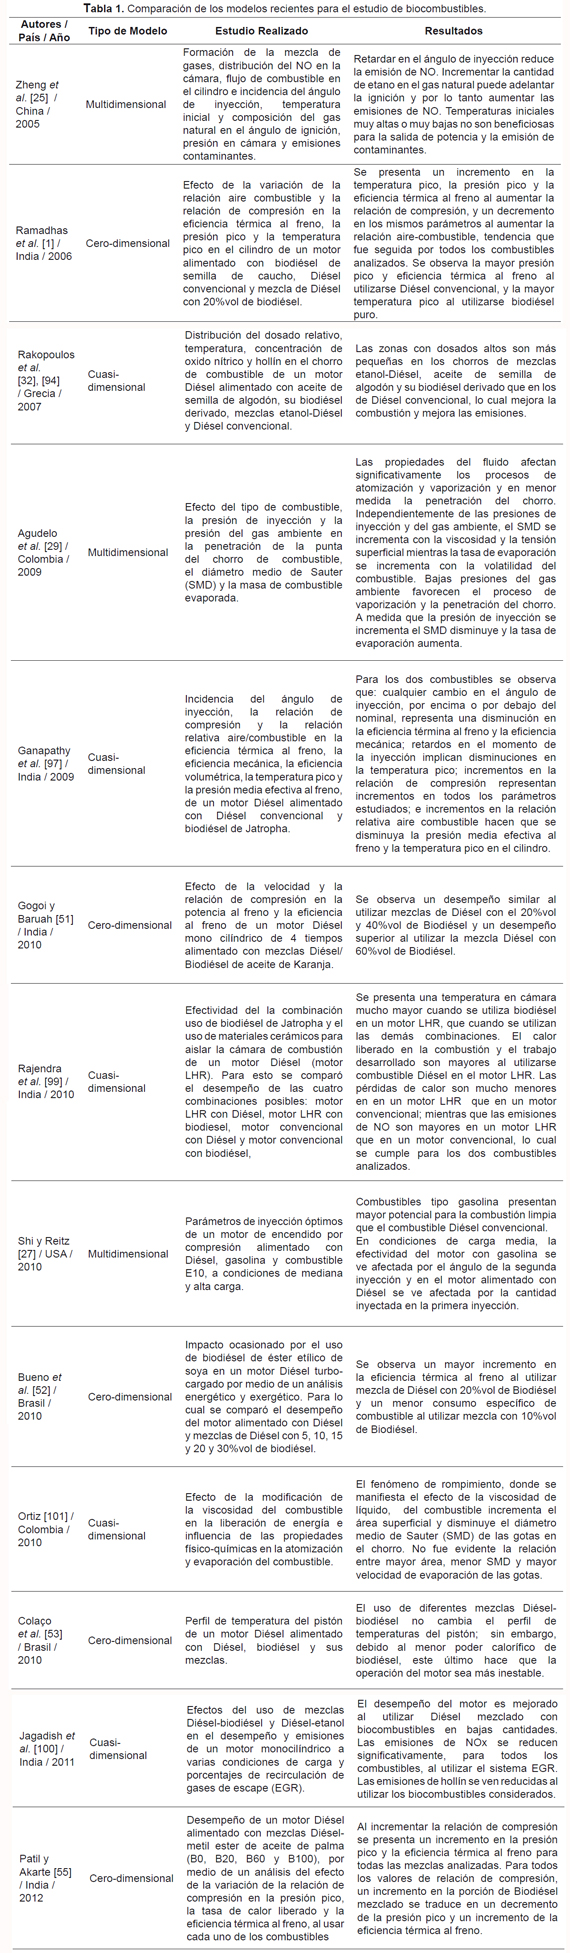 Motores De Combustion Interna Alternativos Payri Pdf .pdf.zip